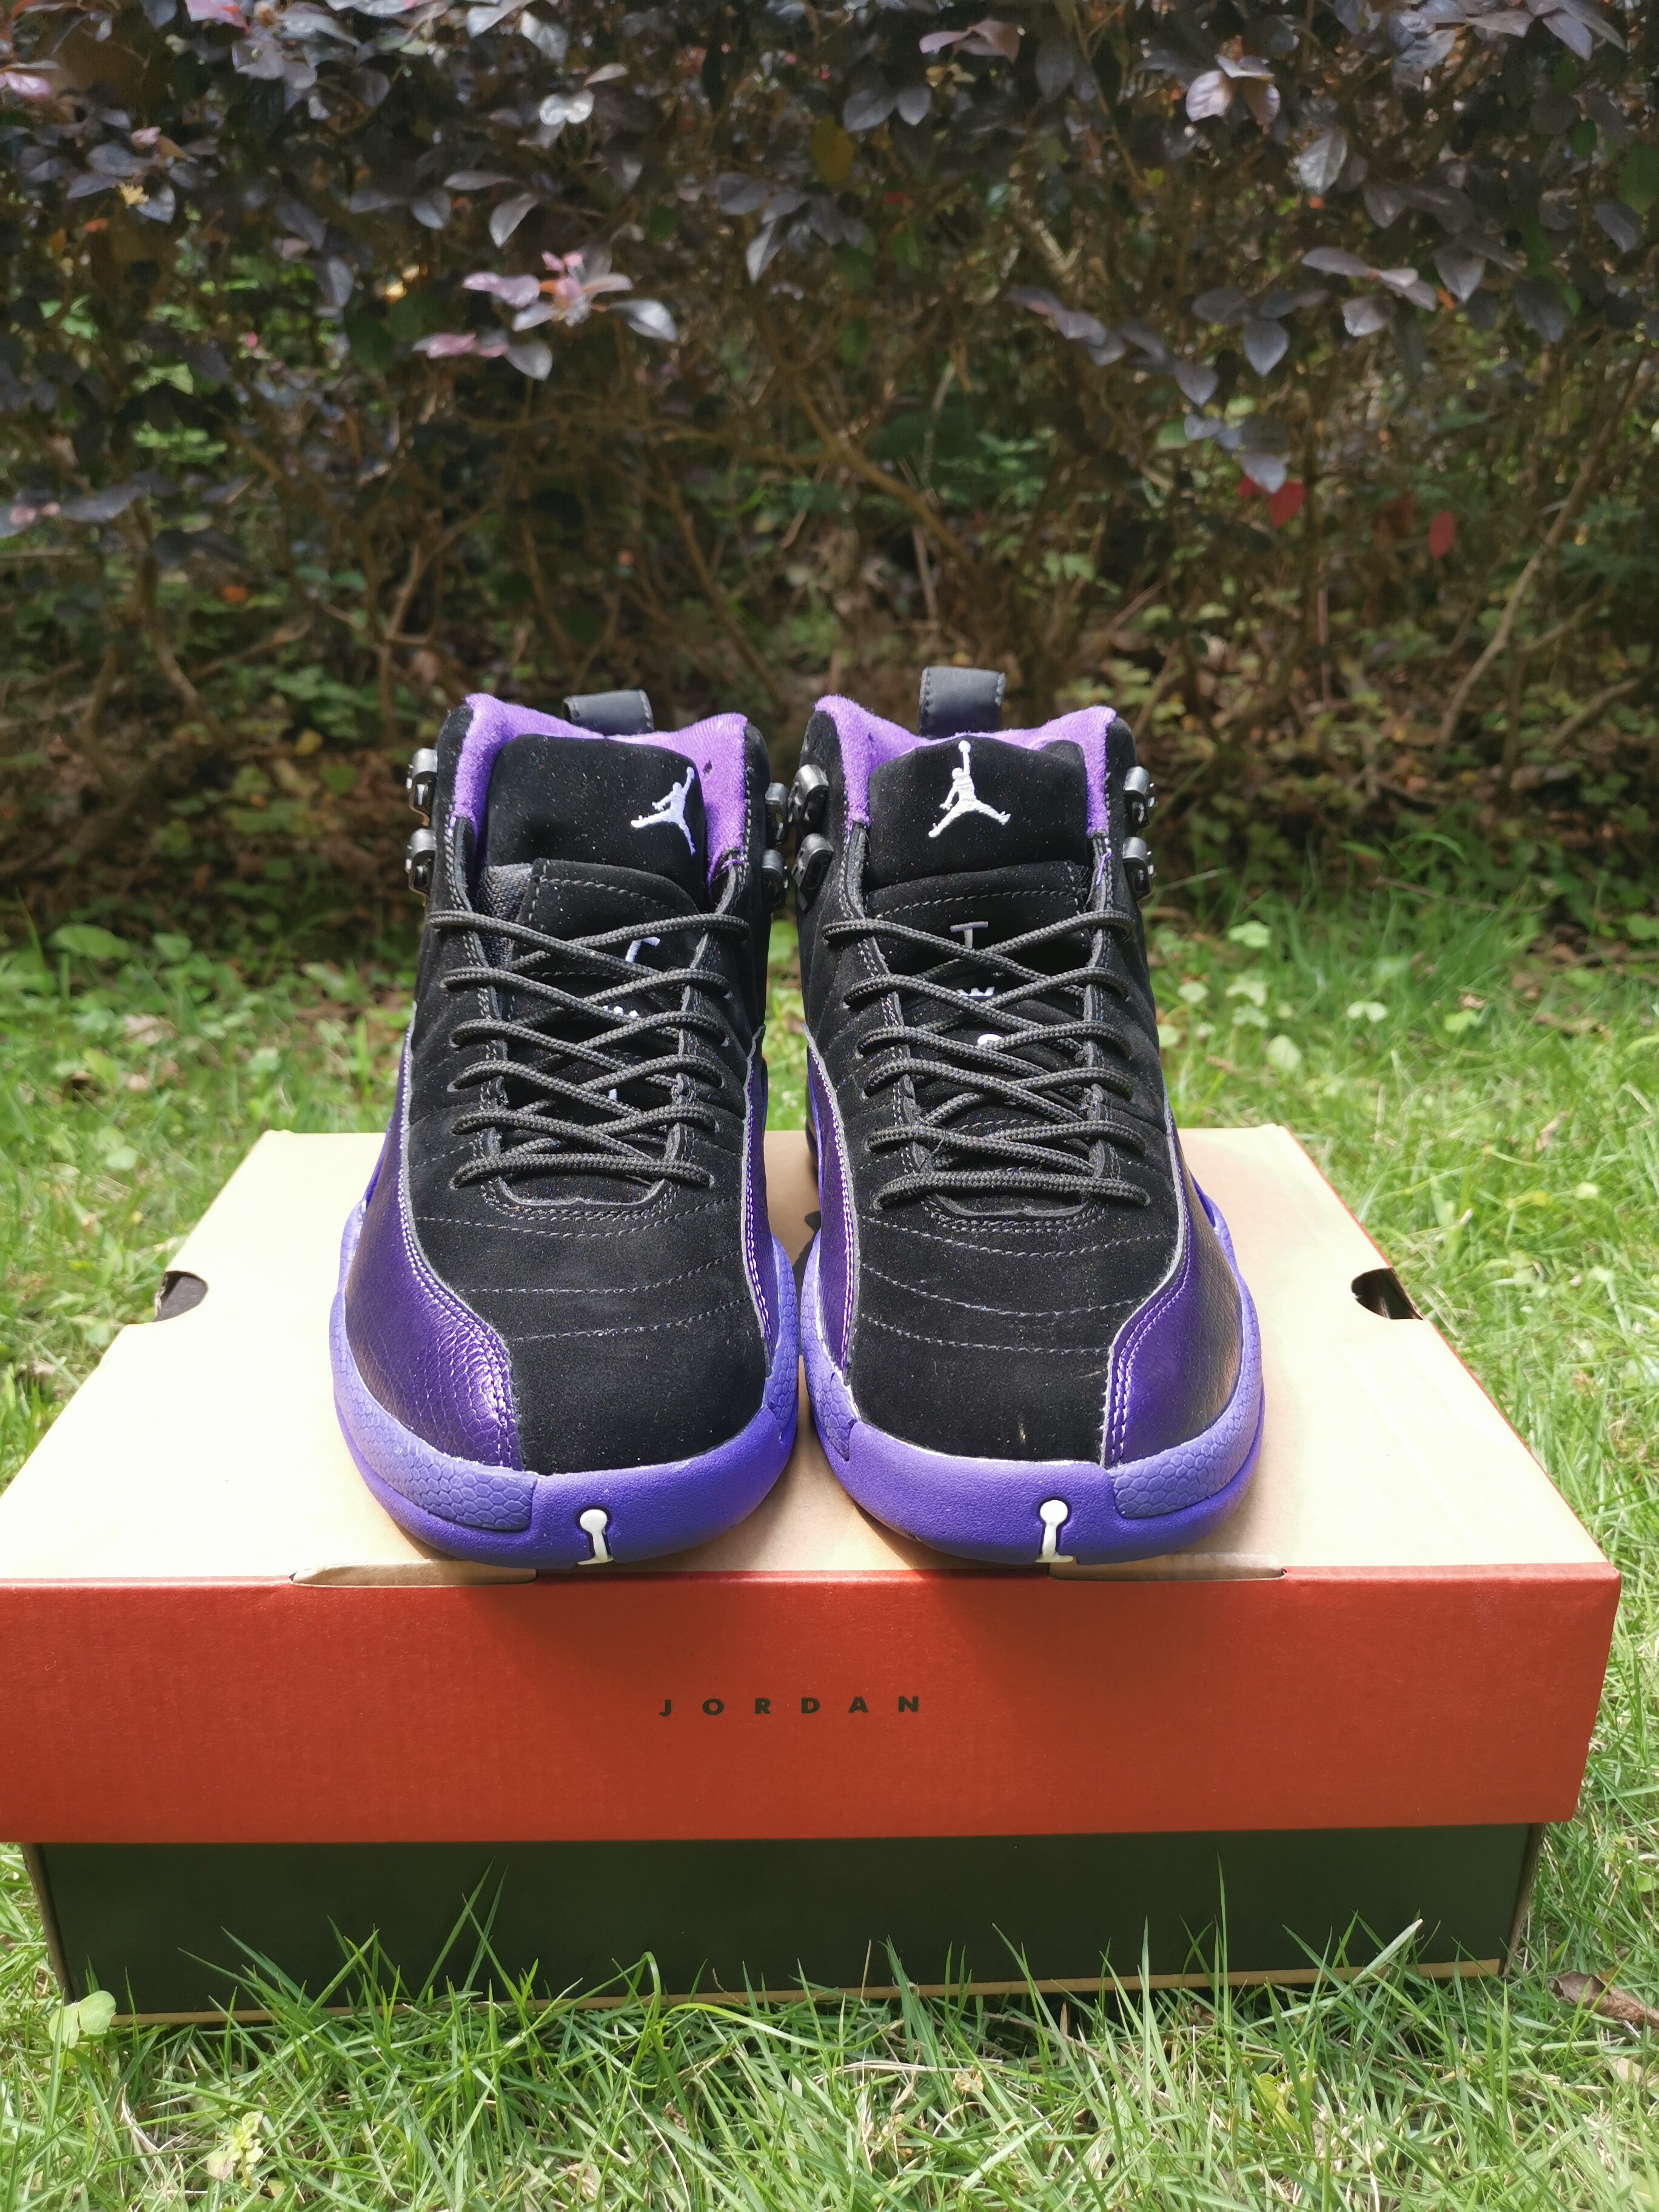 New Air Jordan 12 Black Purple